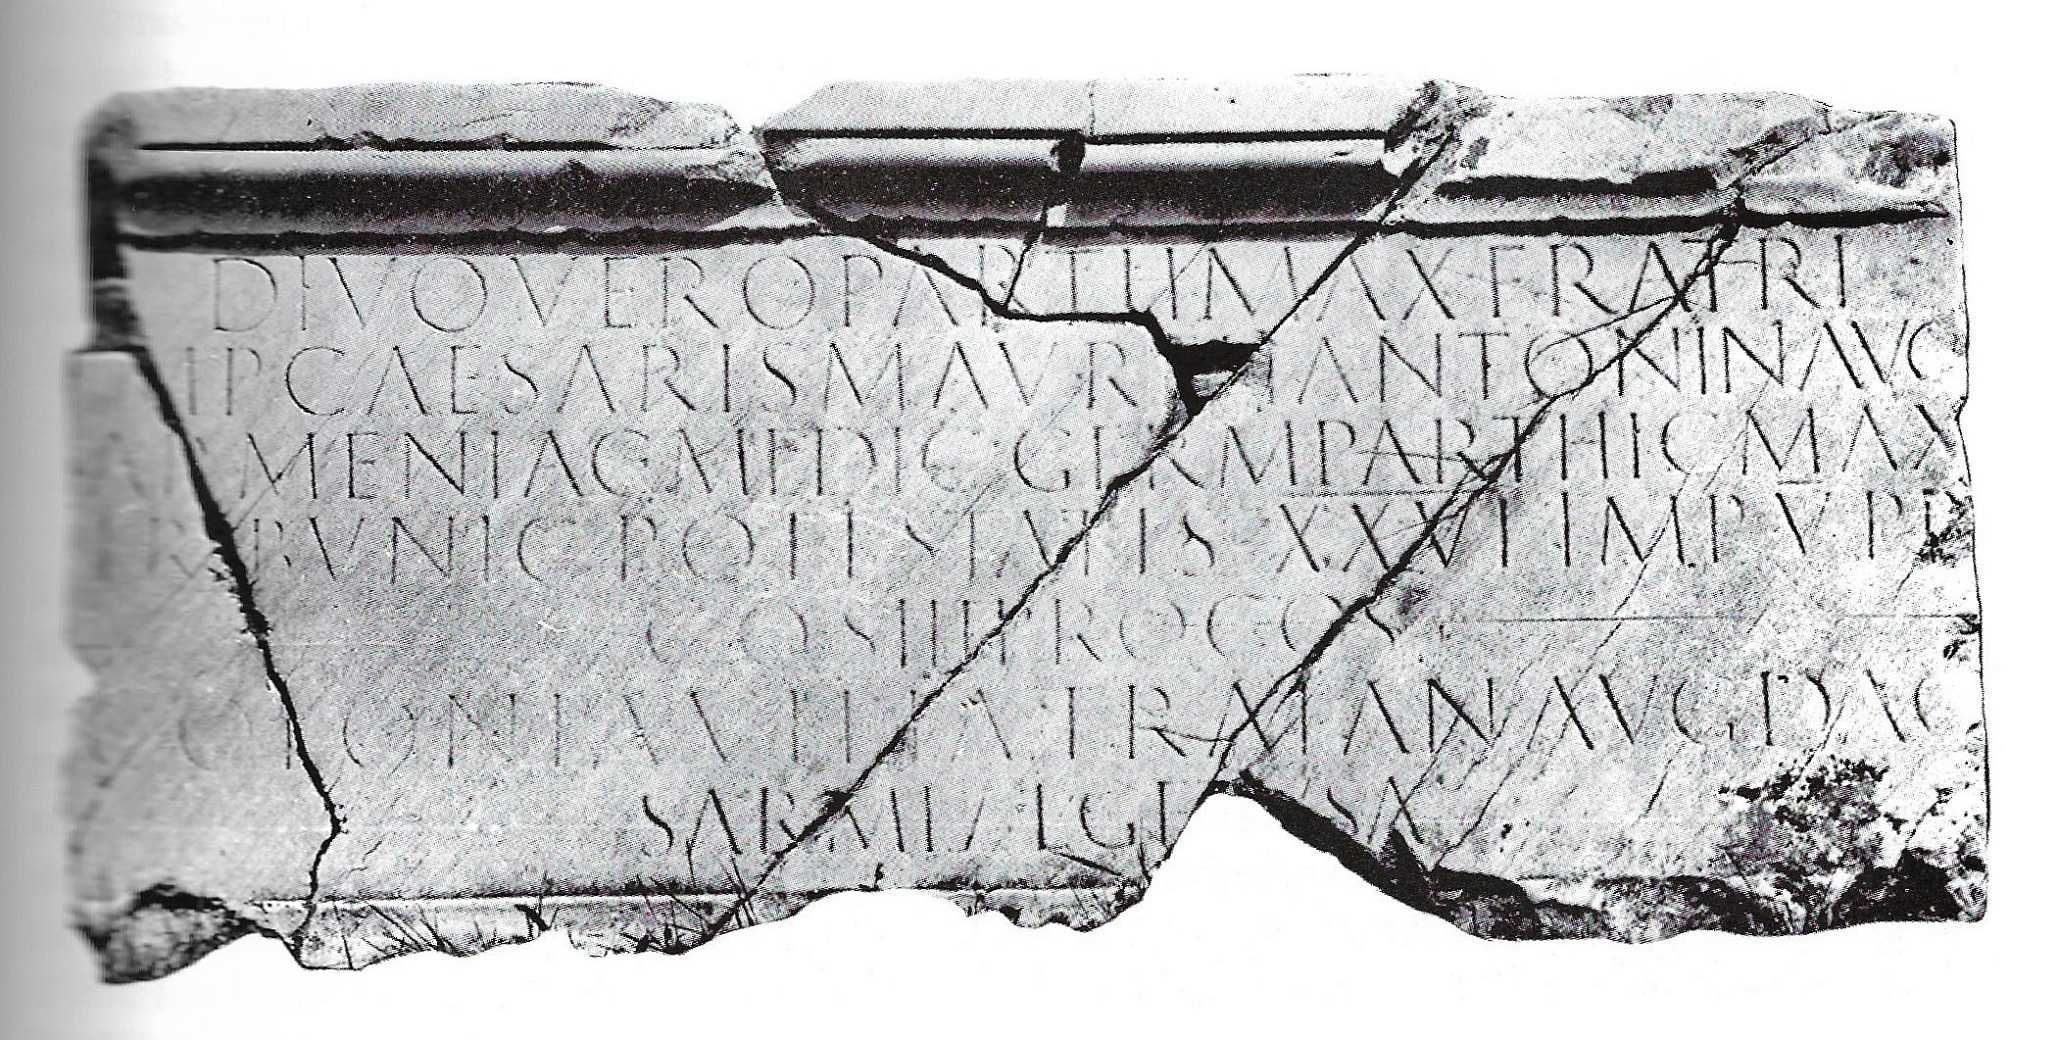 Carte arheologie istorie romana Forumul Sarmizegetusa Ulpia Traiana